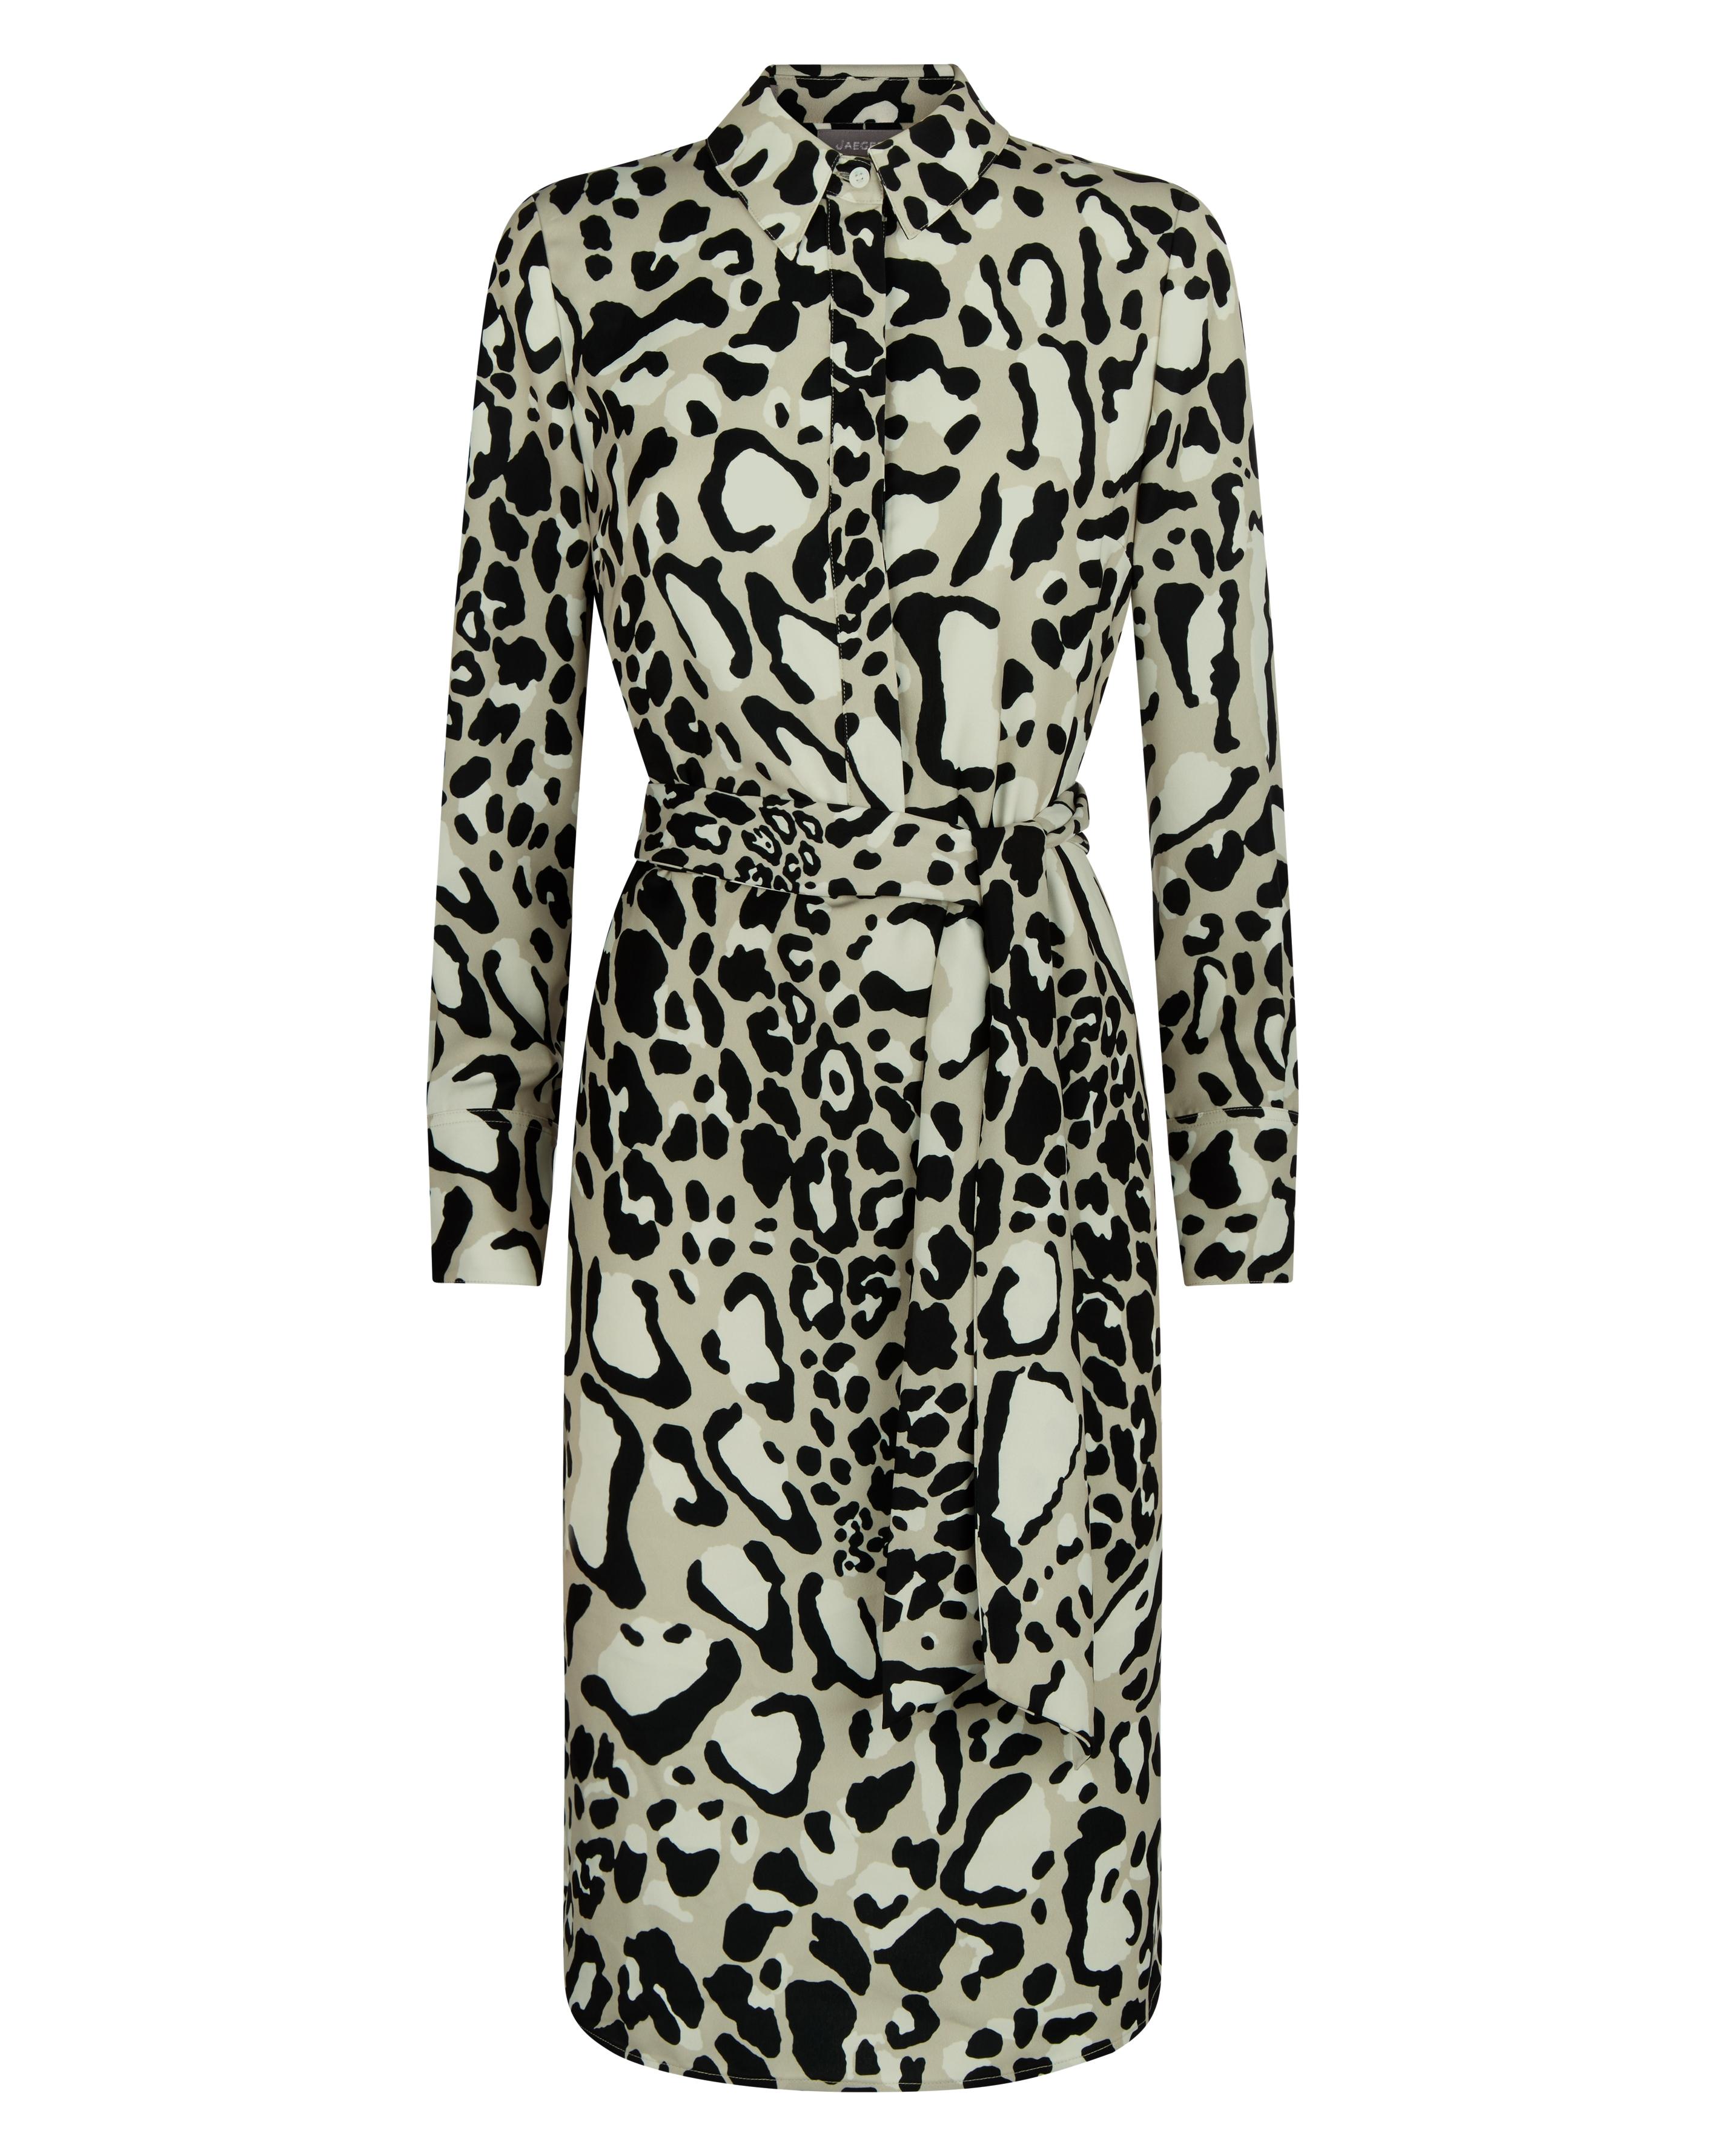 Jaeger Synthetic Leopard Print Dress - Lyst